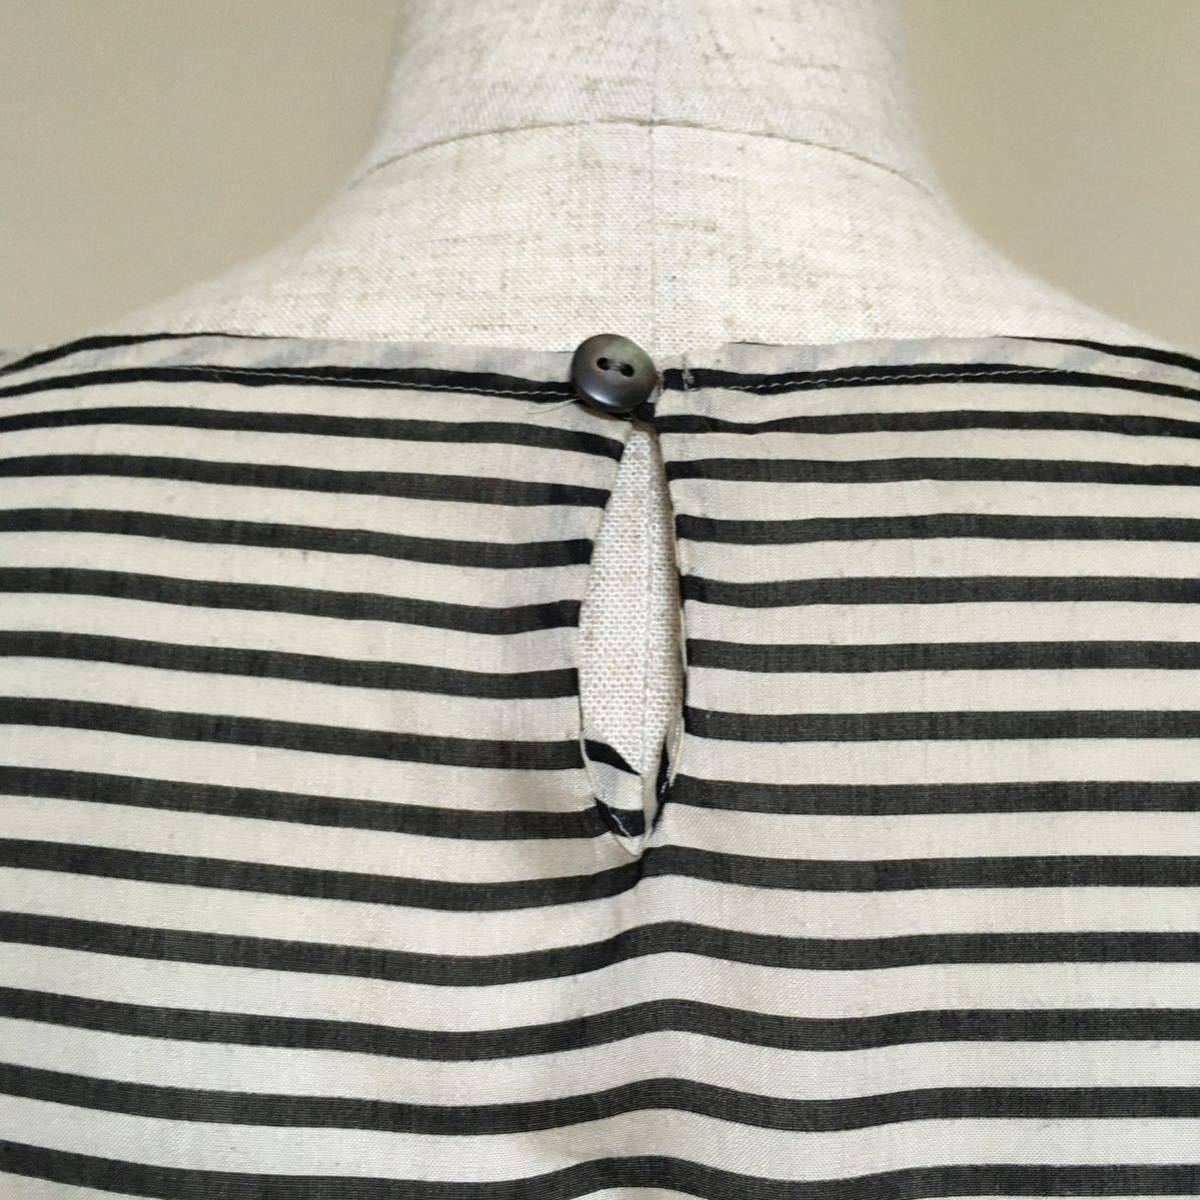 [ANAYI] Anayi ... waist ribbon border short sleeves blouse tops 38/M size corresponding black × beige lady's made in Japan 